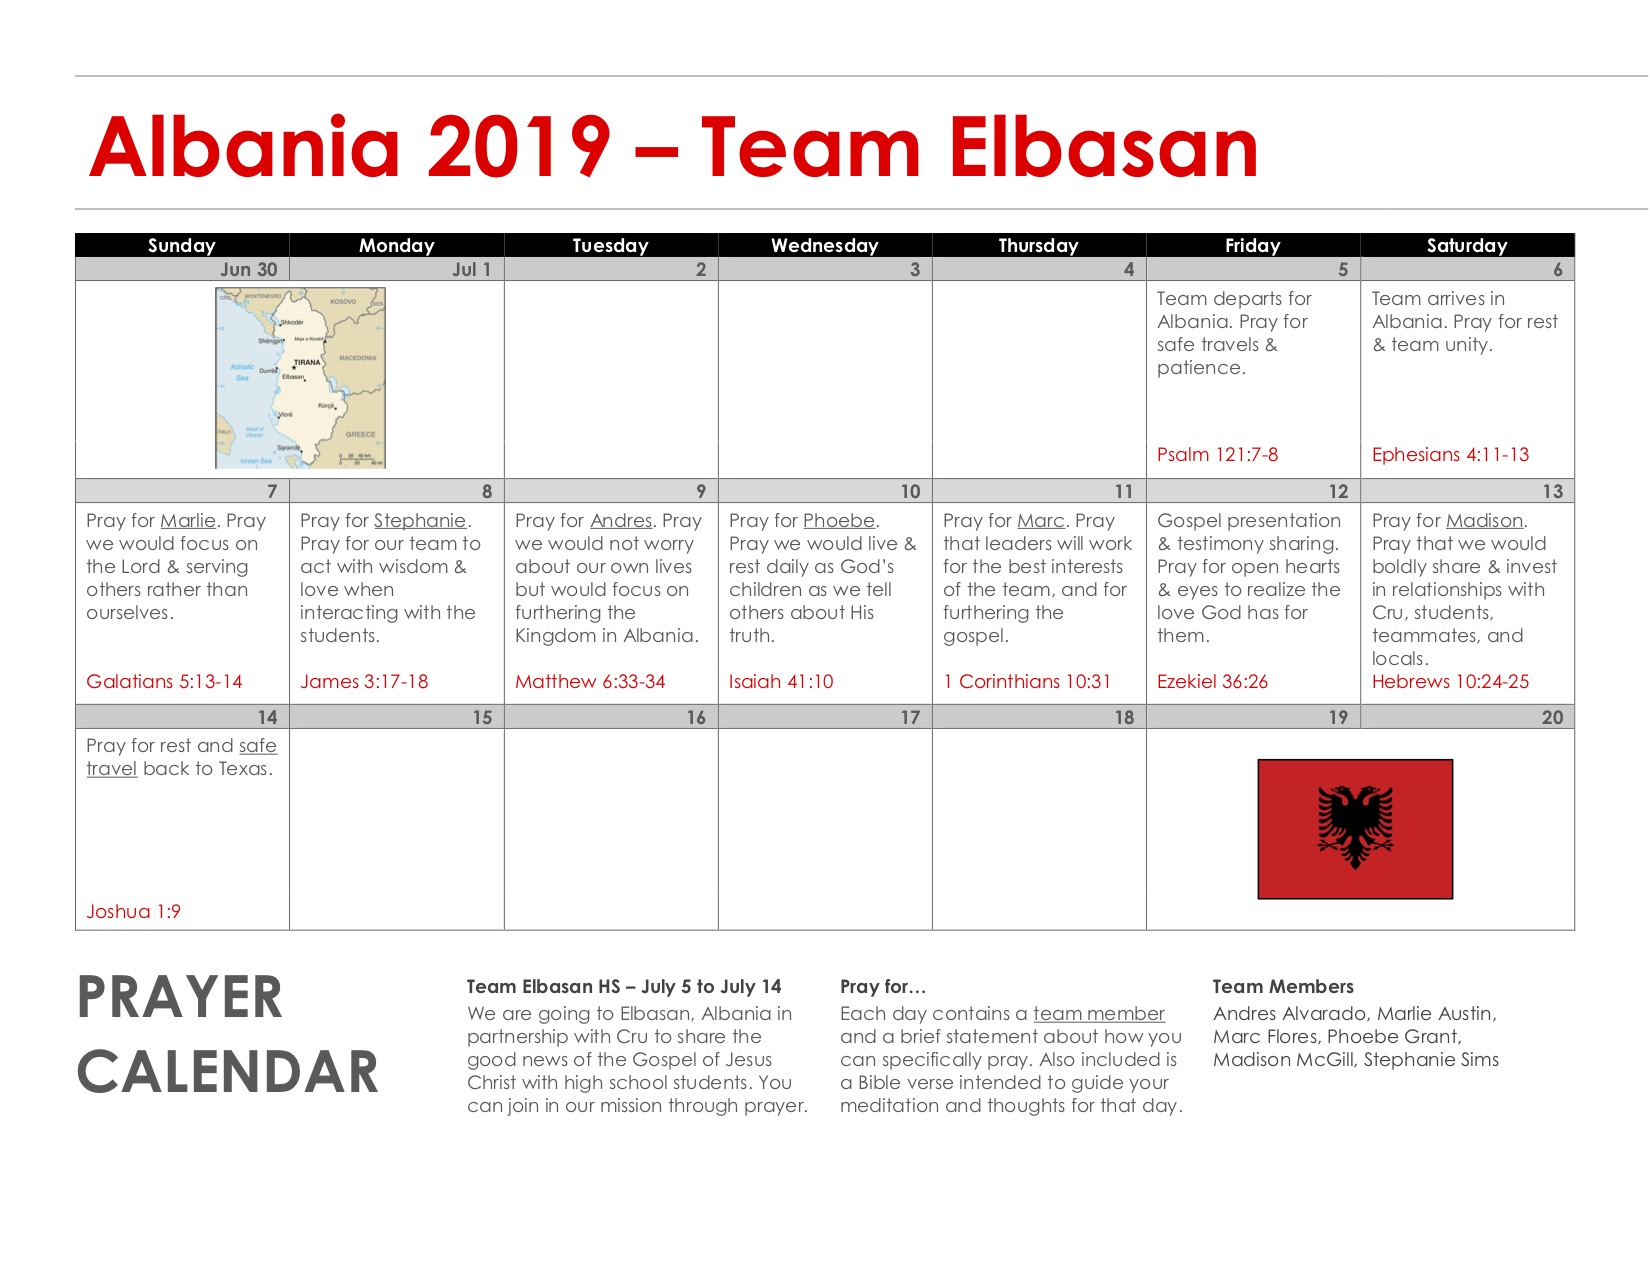 Team Elbasan (High School)